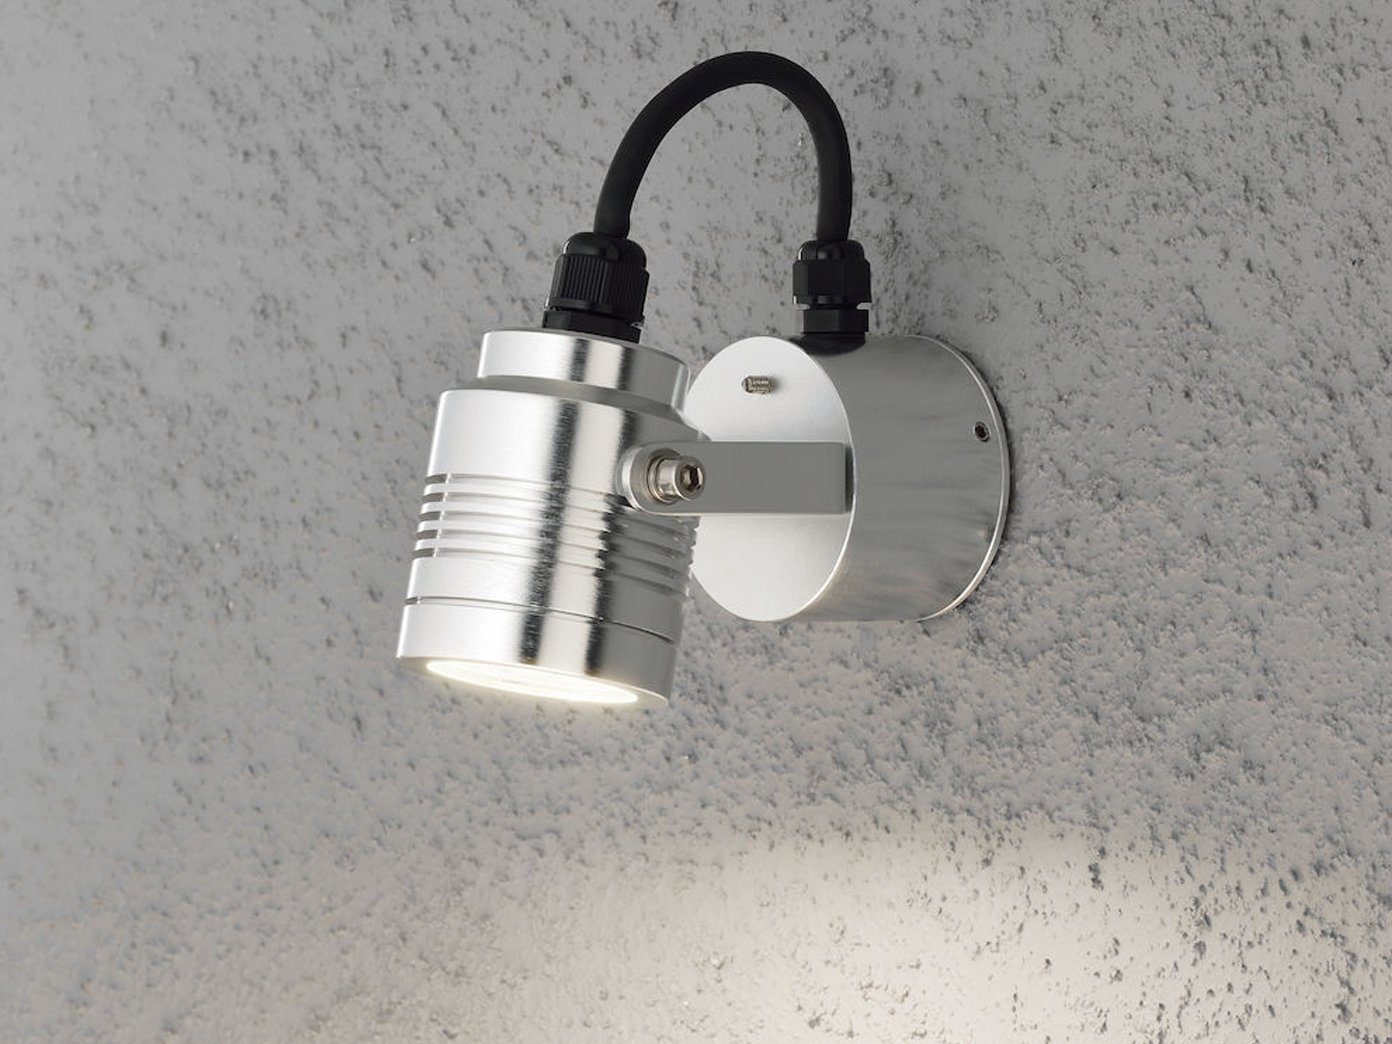 KONSTSMIDE LED Außen-Wandleuchte, LED fest integriert, Warmweiß, kleiner Wand-strahler, Fassadenbeleuchtung Hauswand IP54, Höhe 13cm